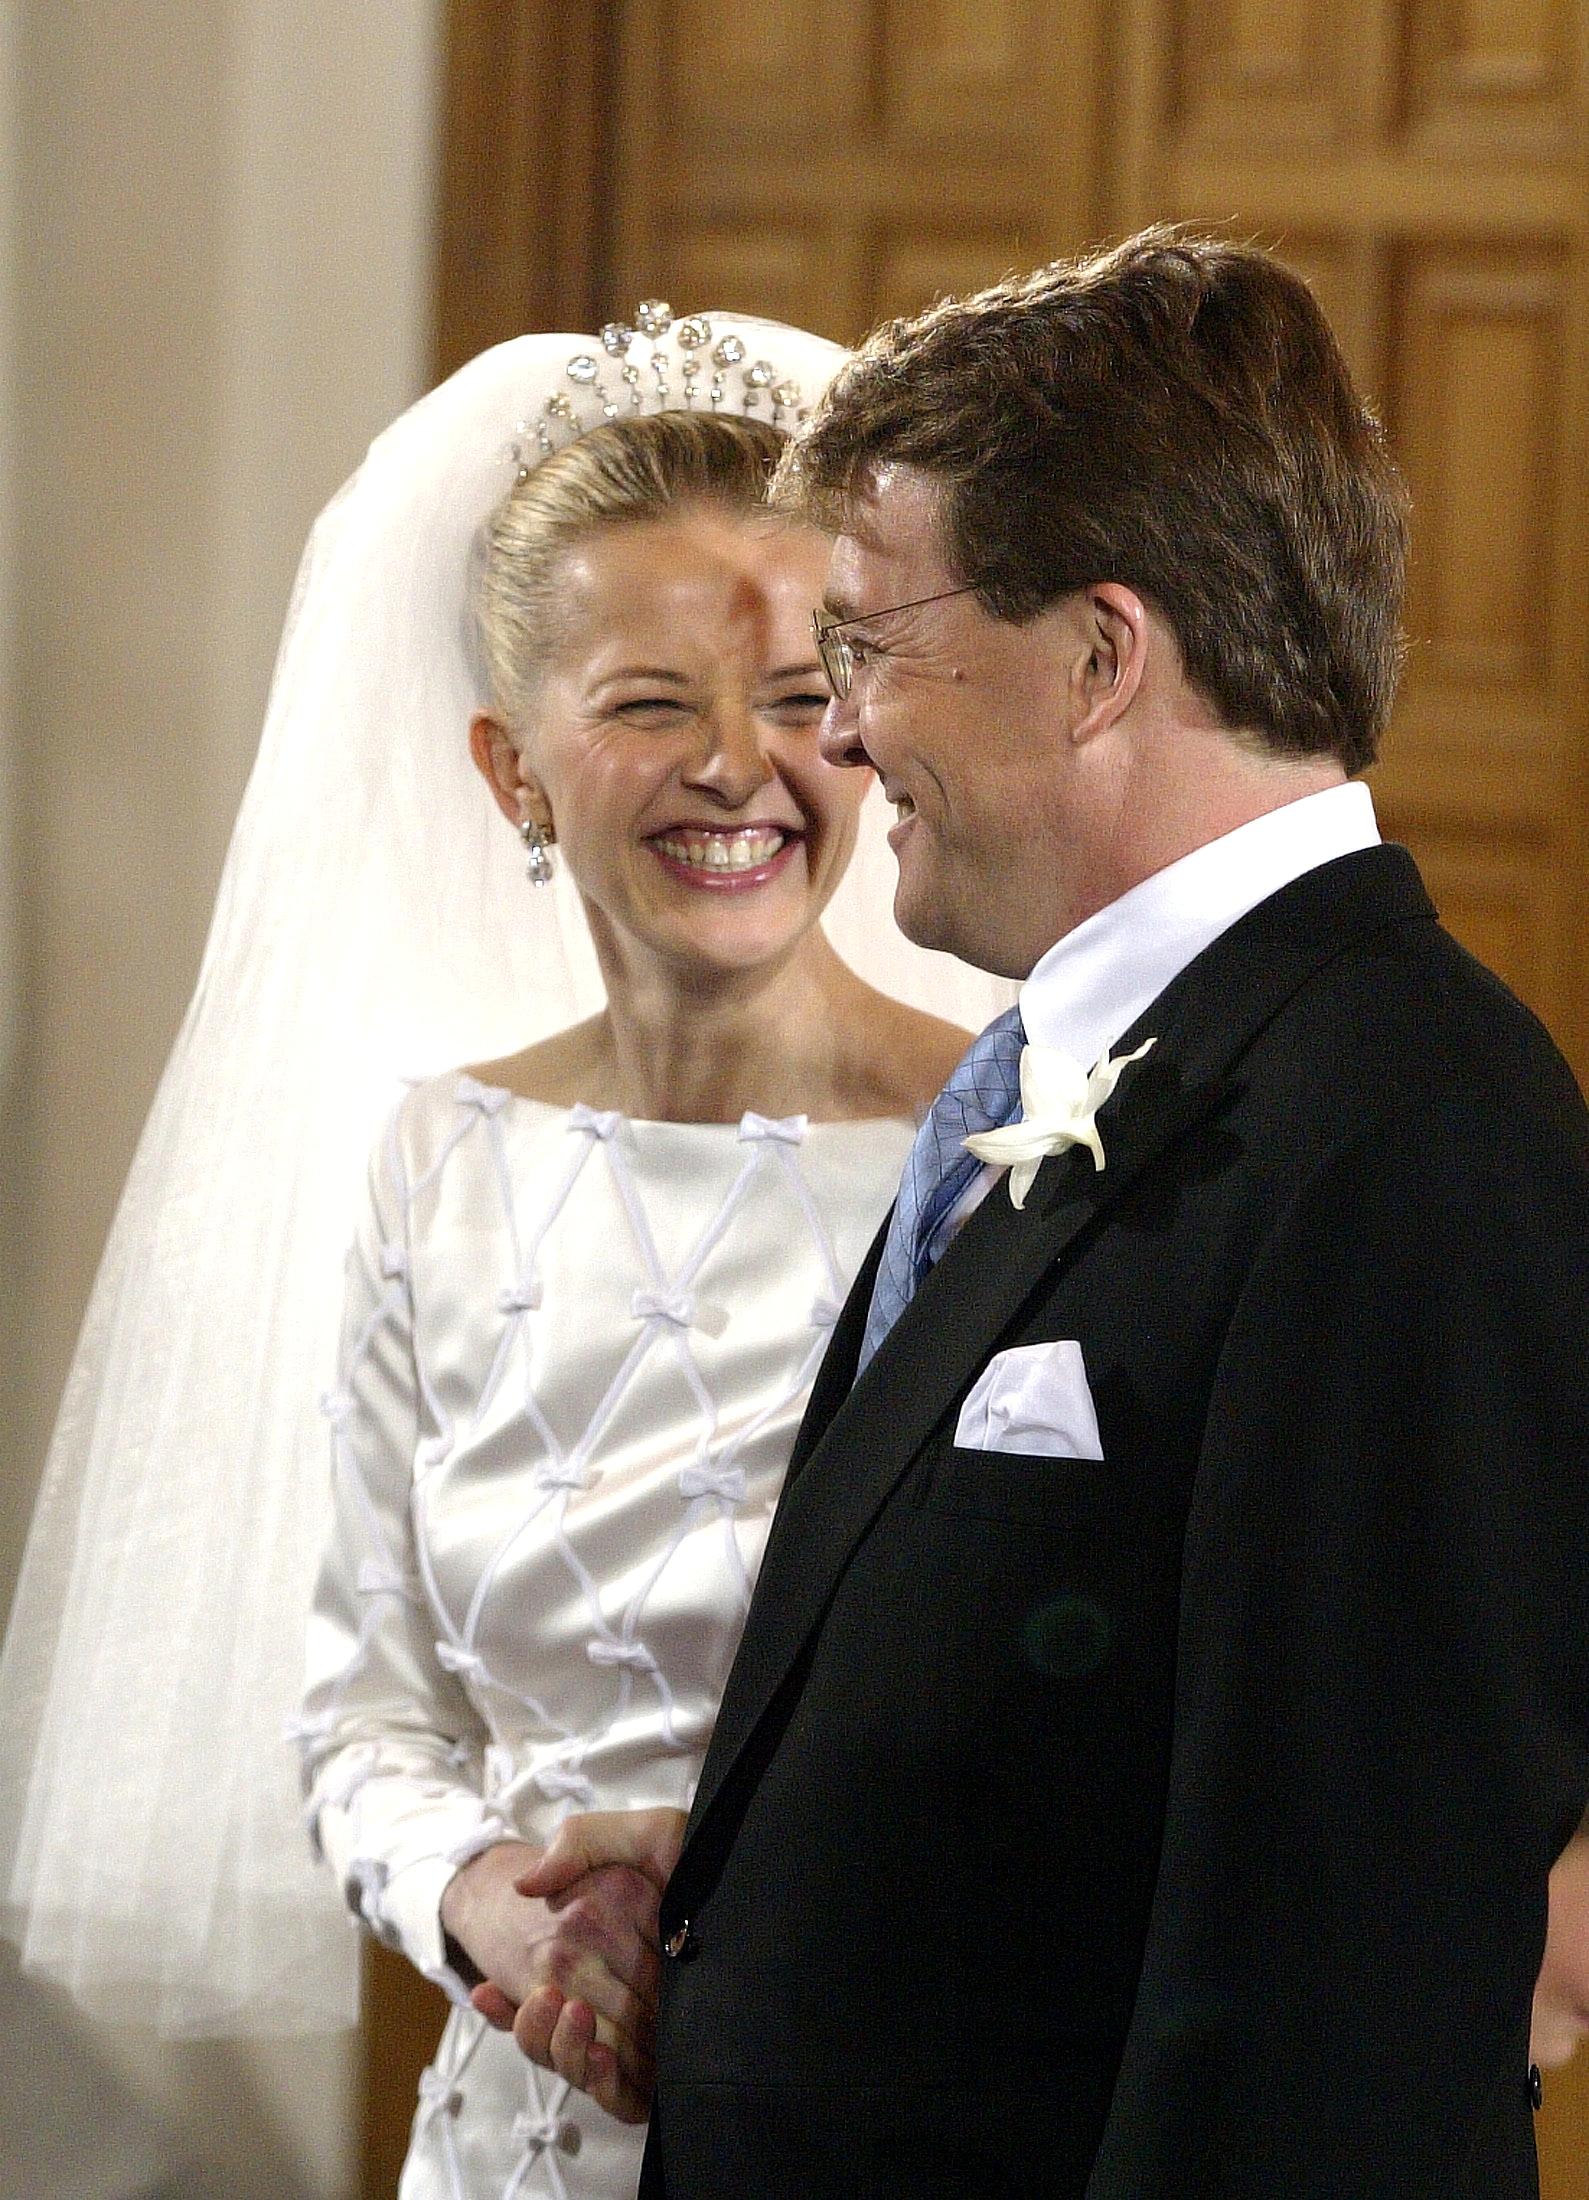 Mabel Wisse Smit smiles at late husband Prince Friso of Orange-Nassau after their wedding ceremony in Delft, Netherlands on April 24, 2004.